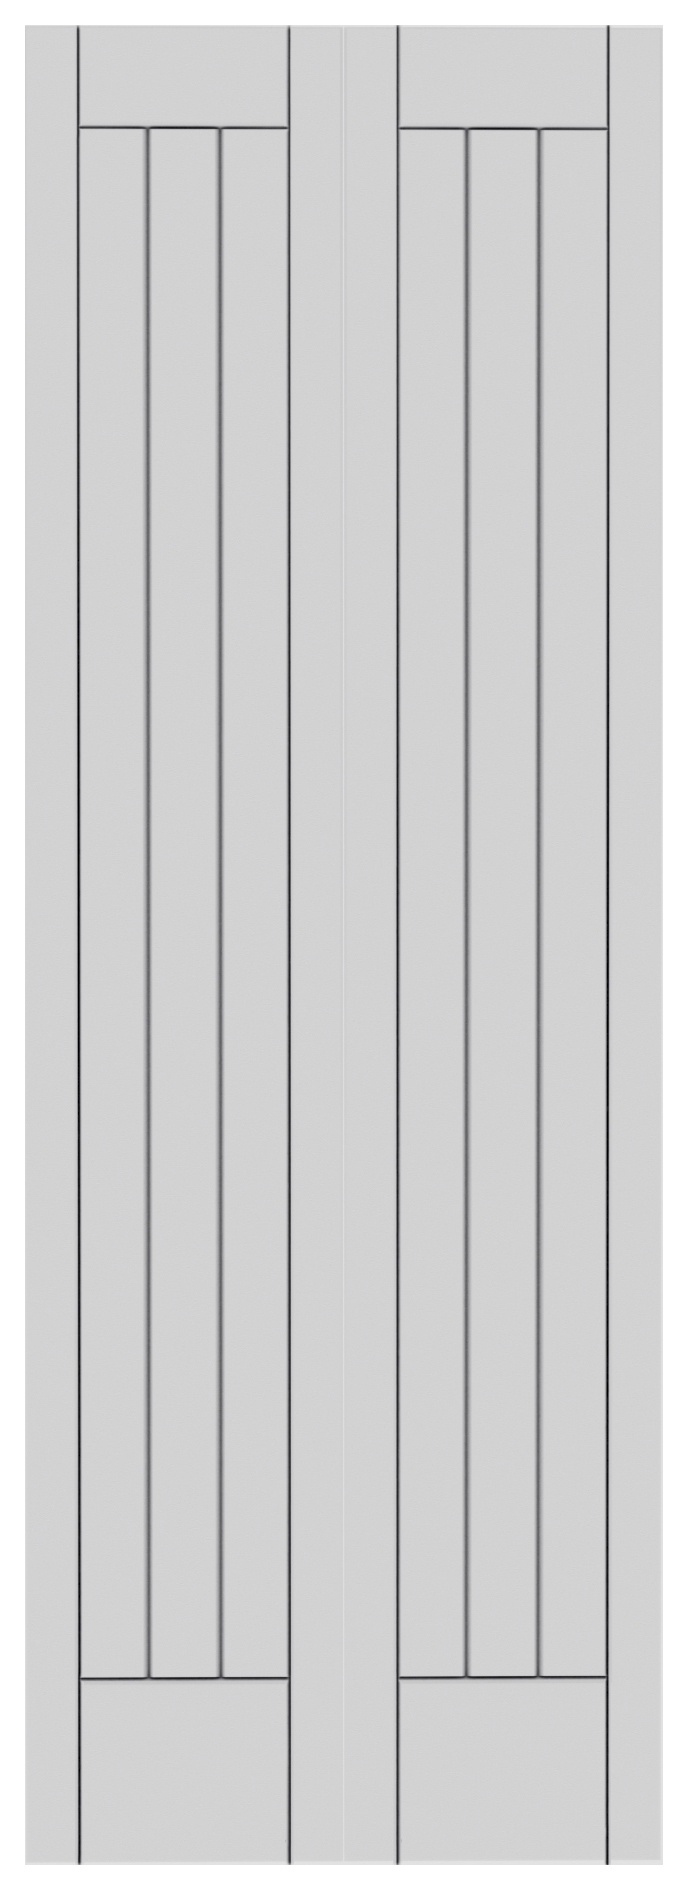 Image of Wickes Geneva White Primed Bi-Fold Solid Core Door - 1947 x 674mm